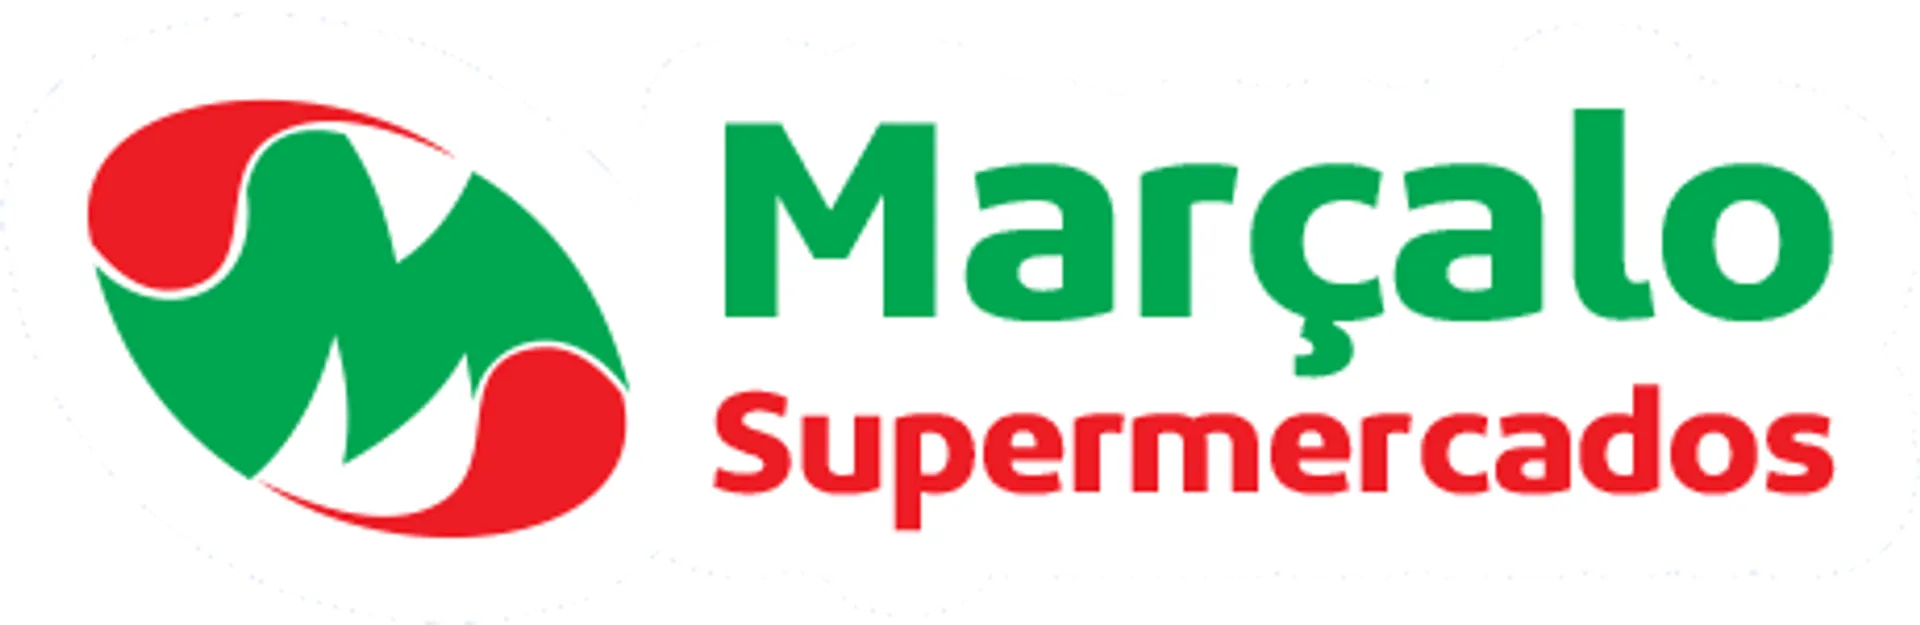 MARÇALO logo